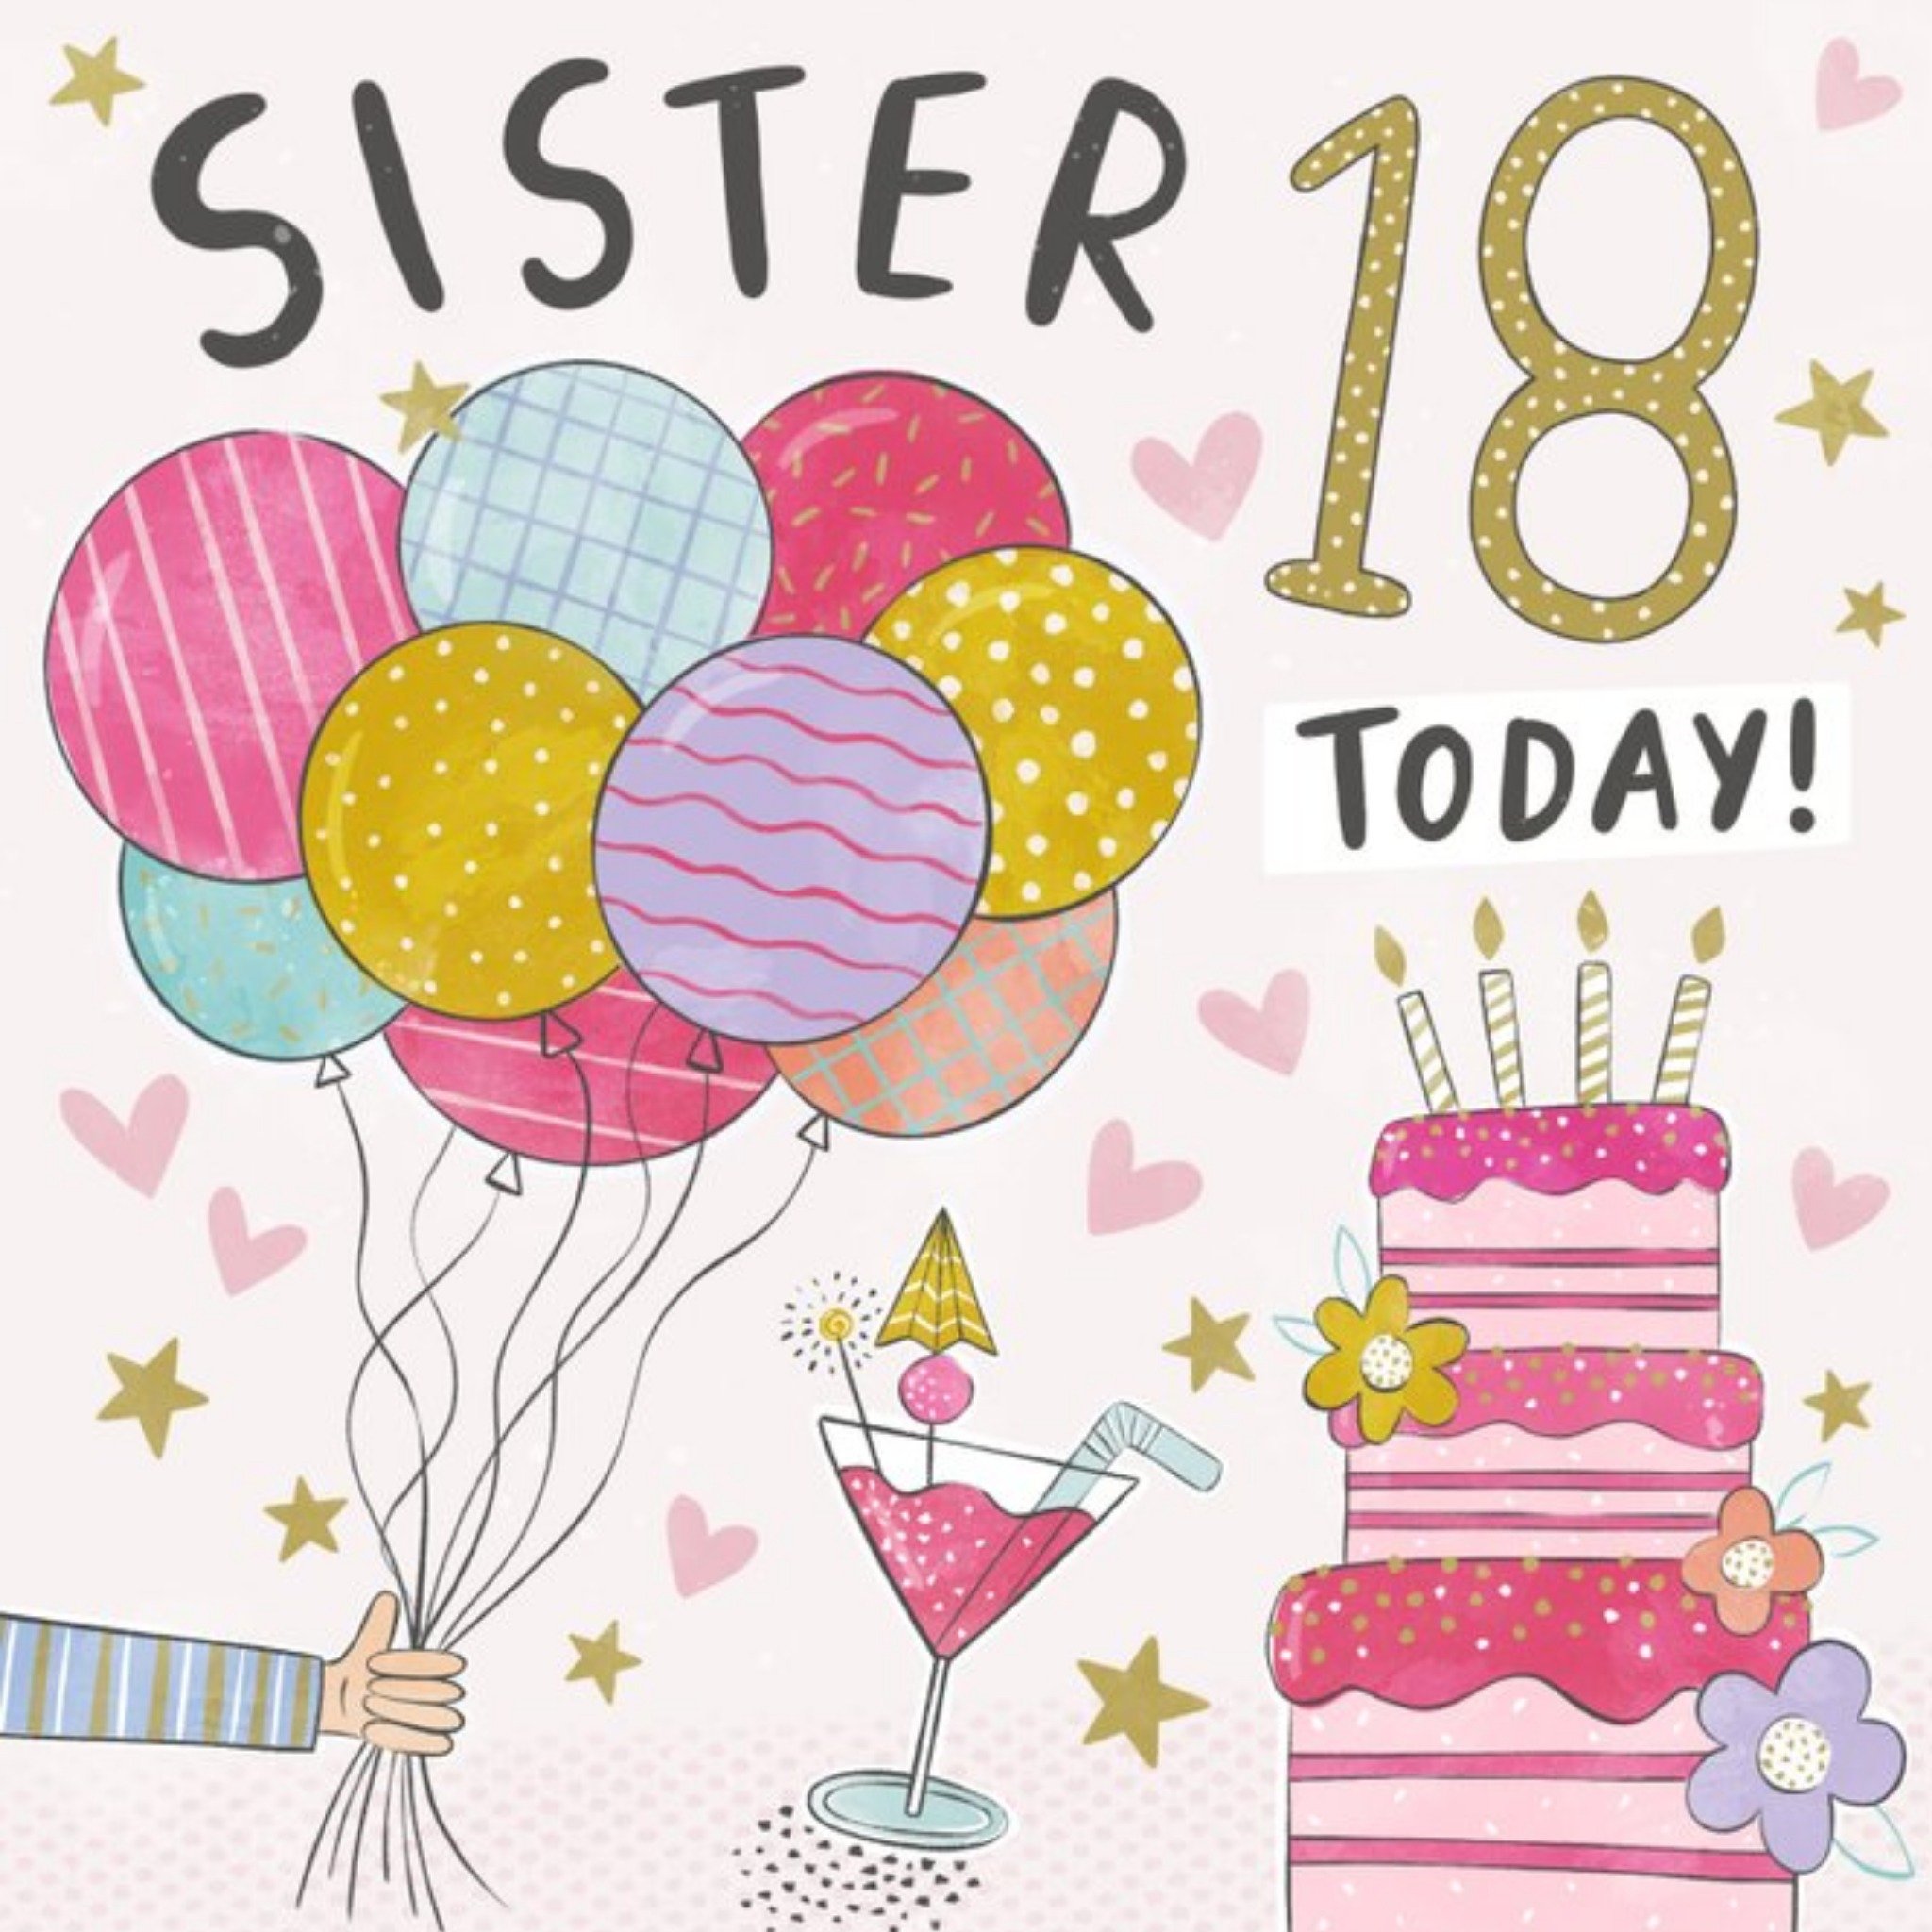 Moonpig Fun Cute Illustration Sister 18 Today Birthday Card, Large